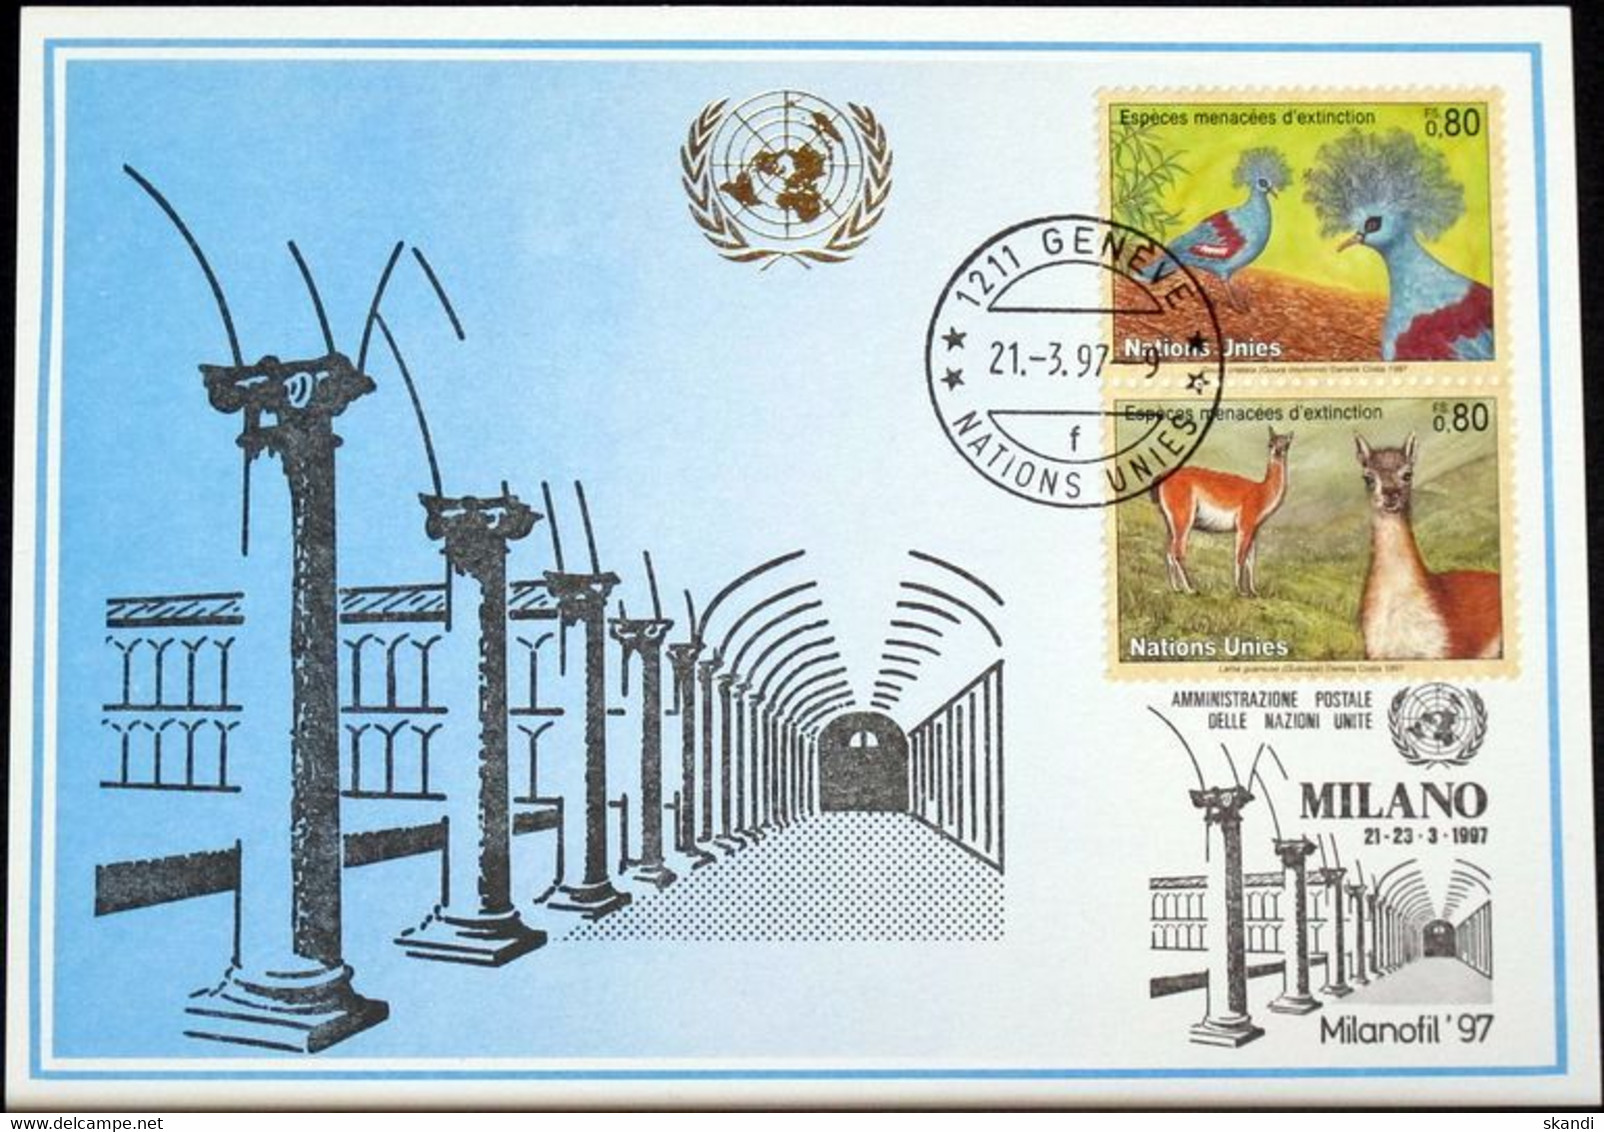 UNO GENF 1997 Mi-Nr. 277 Blaue Karte - Blue Card - Storia Postale